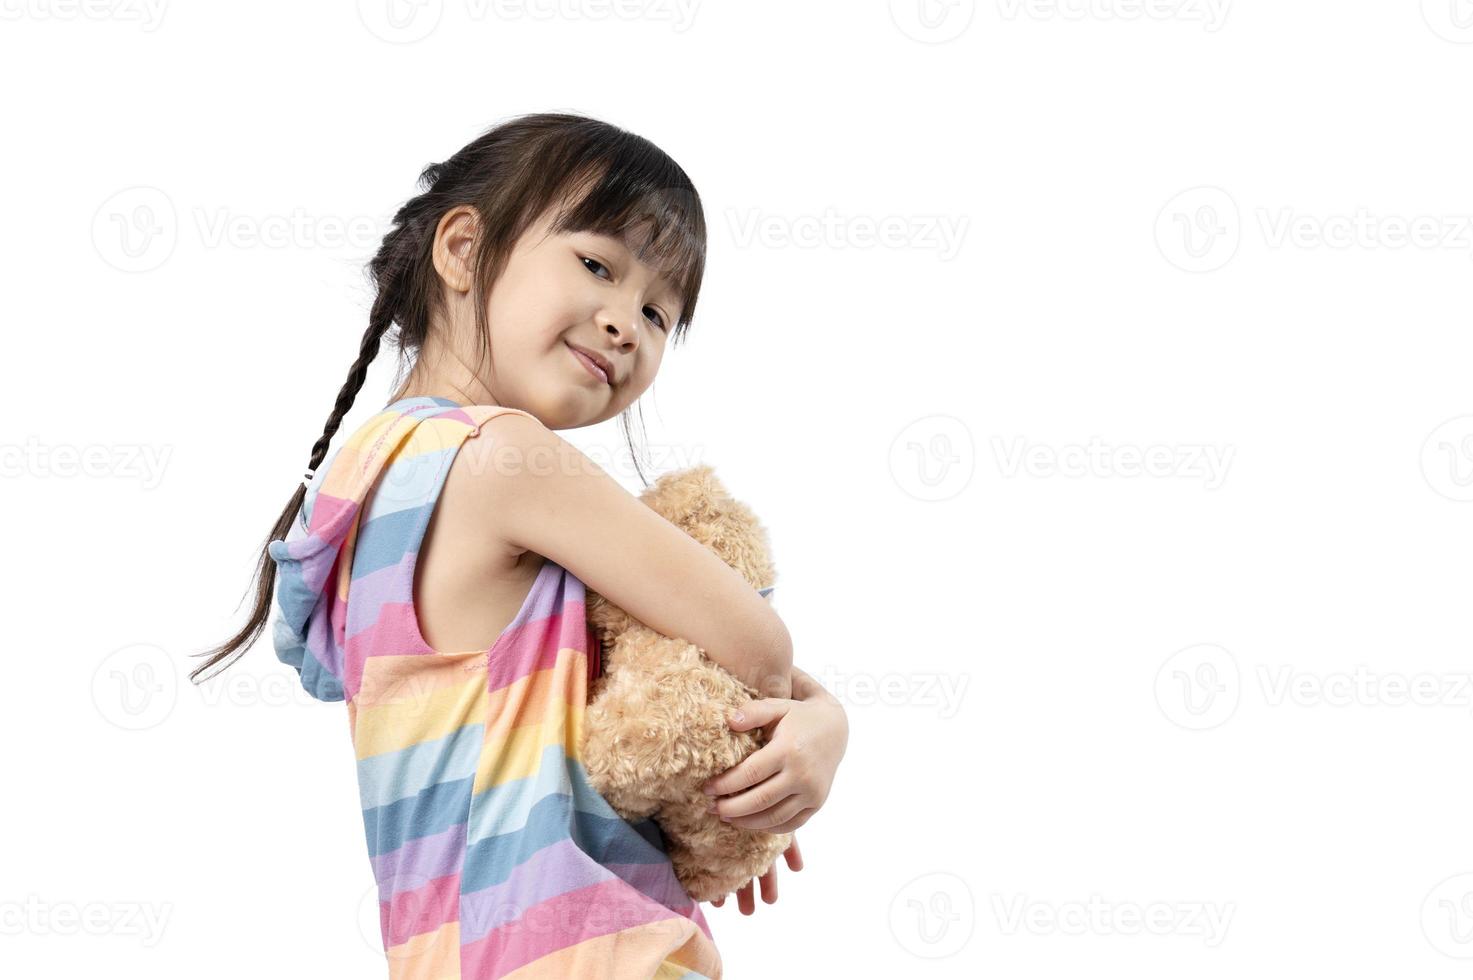 schattig weinig Aziatisch meisje knuffelen haar favoriete bruin teddy beer en glimlachen in wit achtergrond. meisje en pop, favoriete speelgoed, gelukkig kind foto